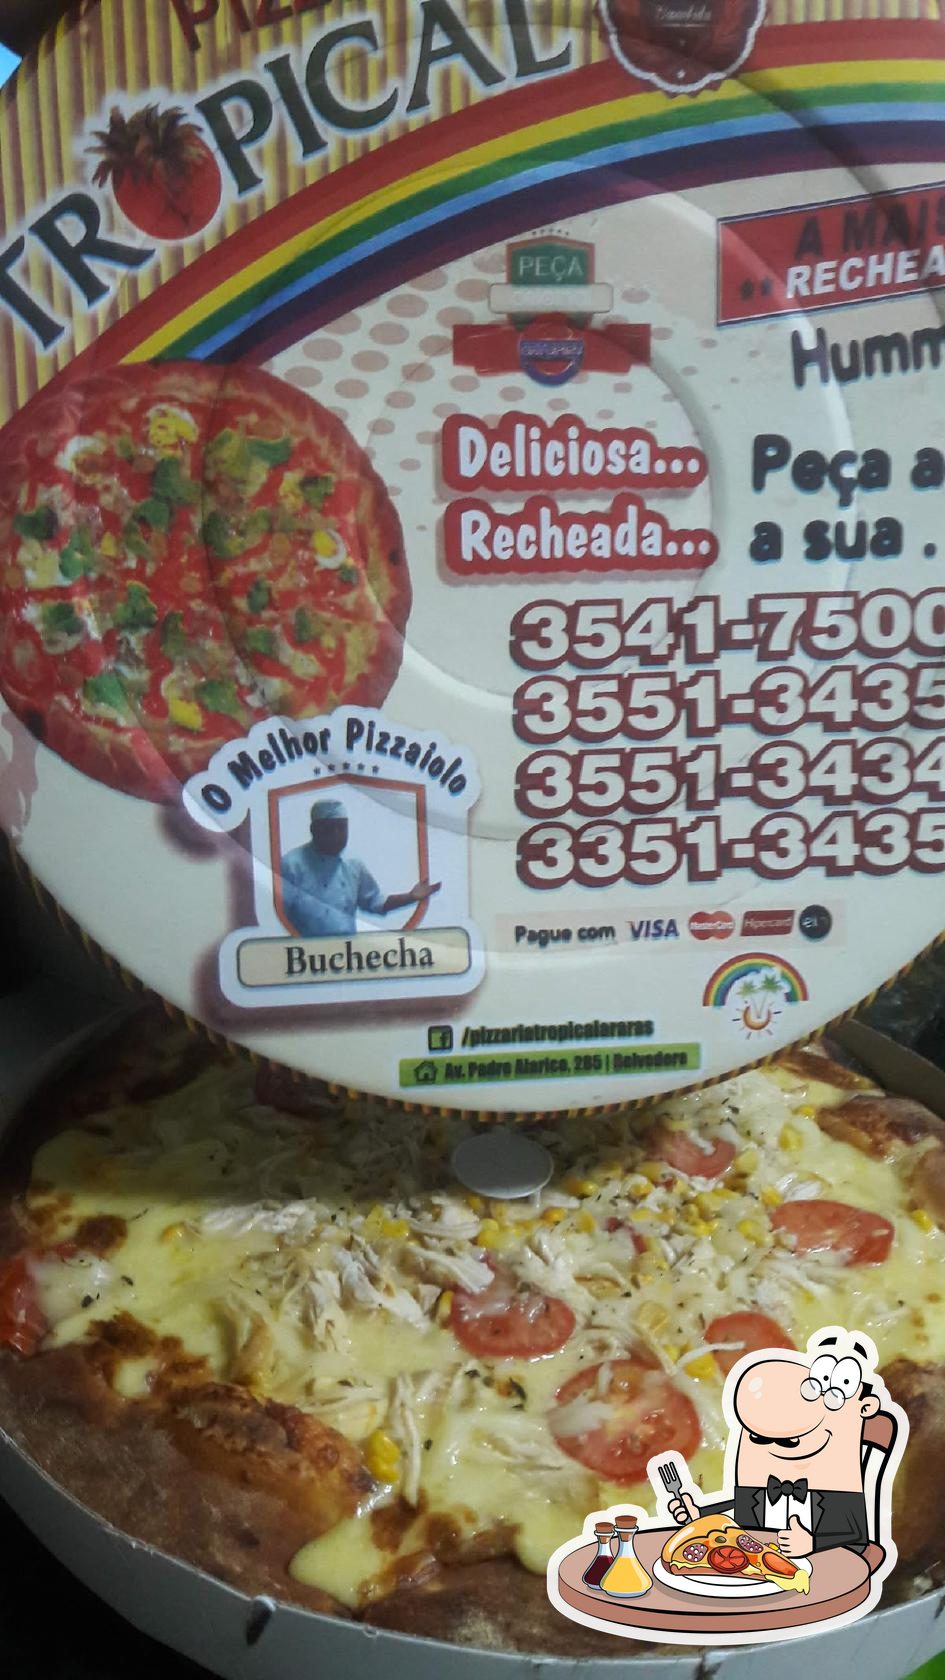 Pappa Pizza em Araras, SP, Pizzarias